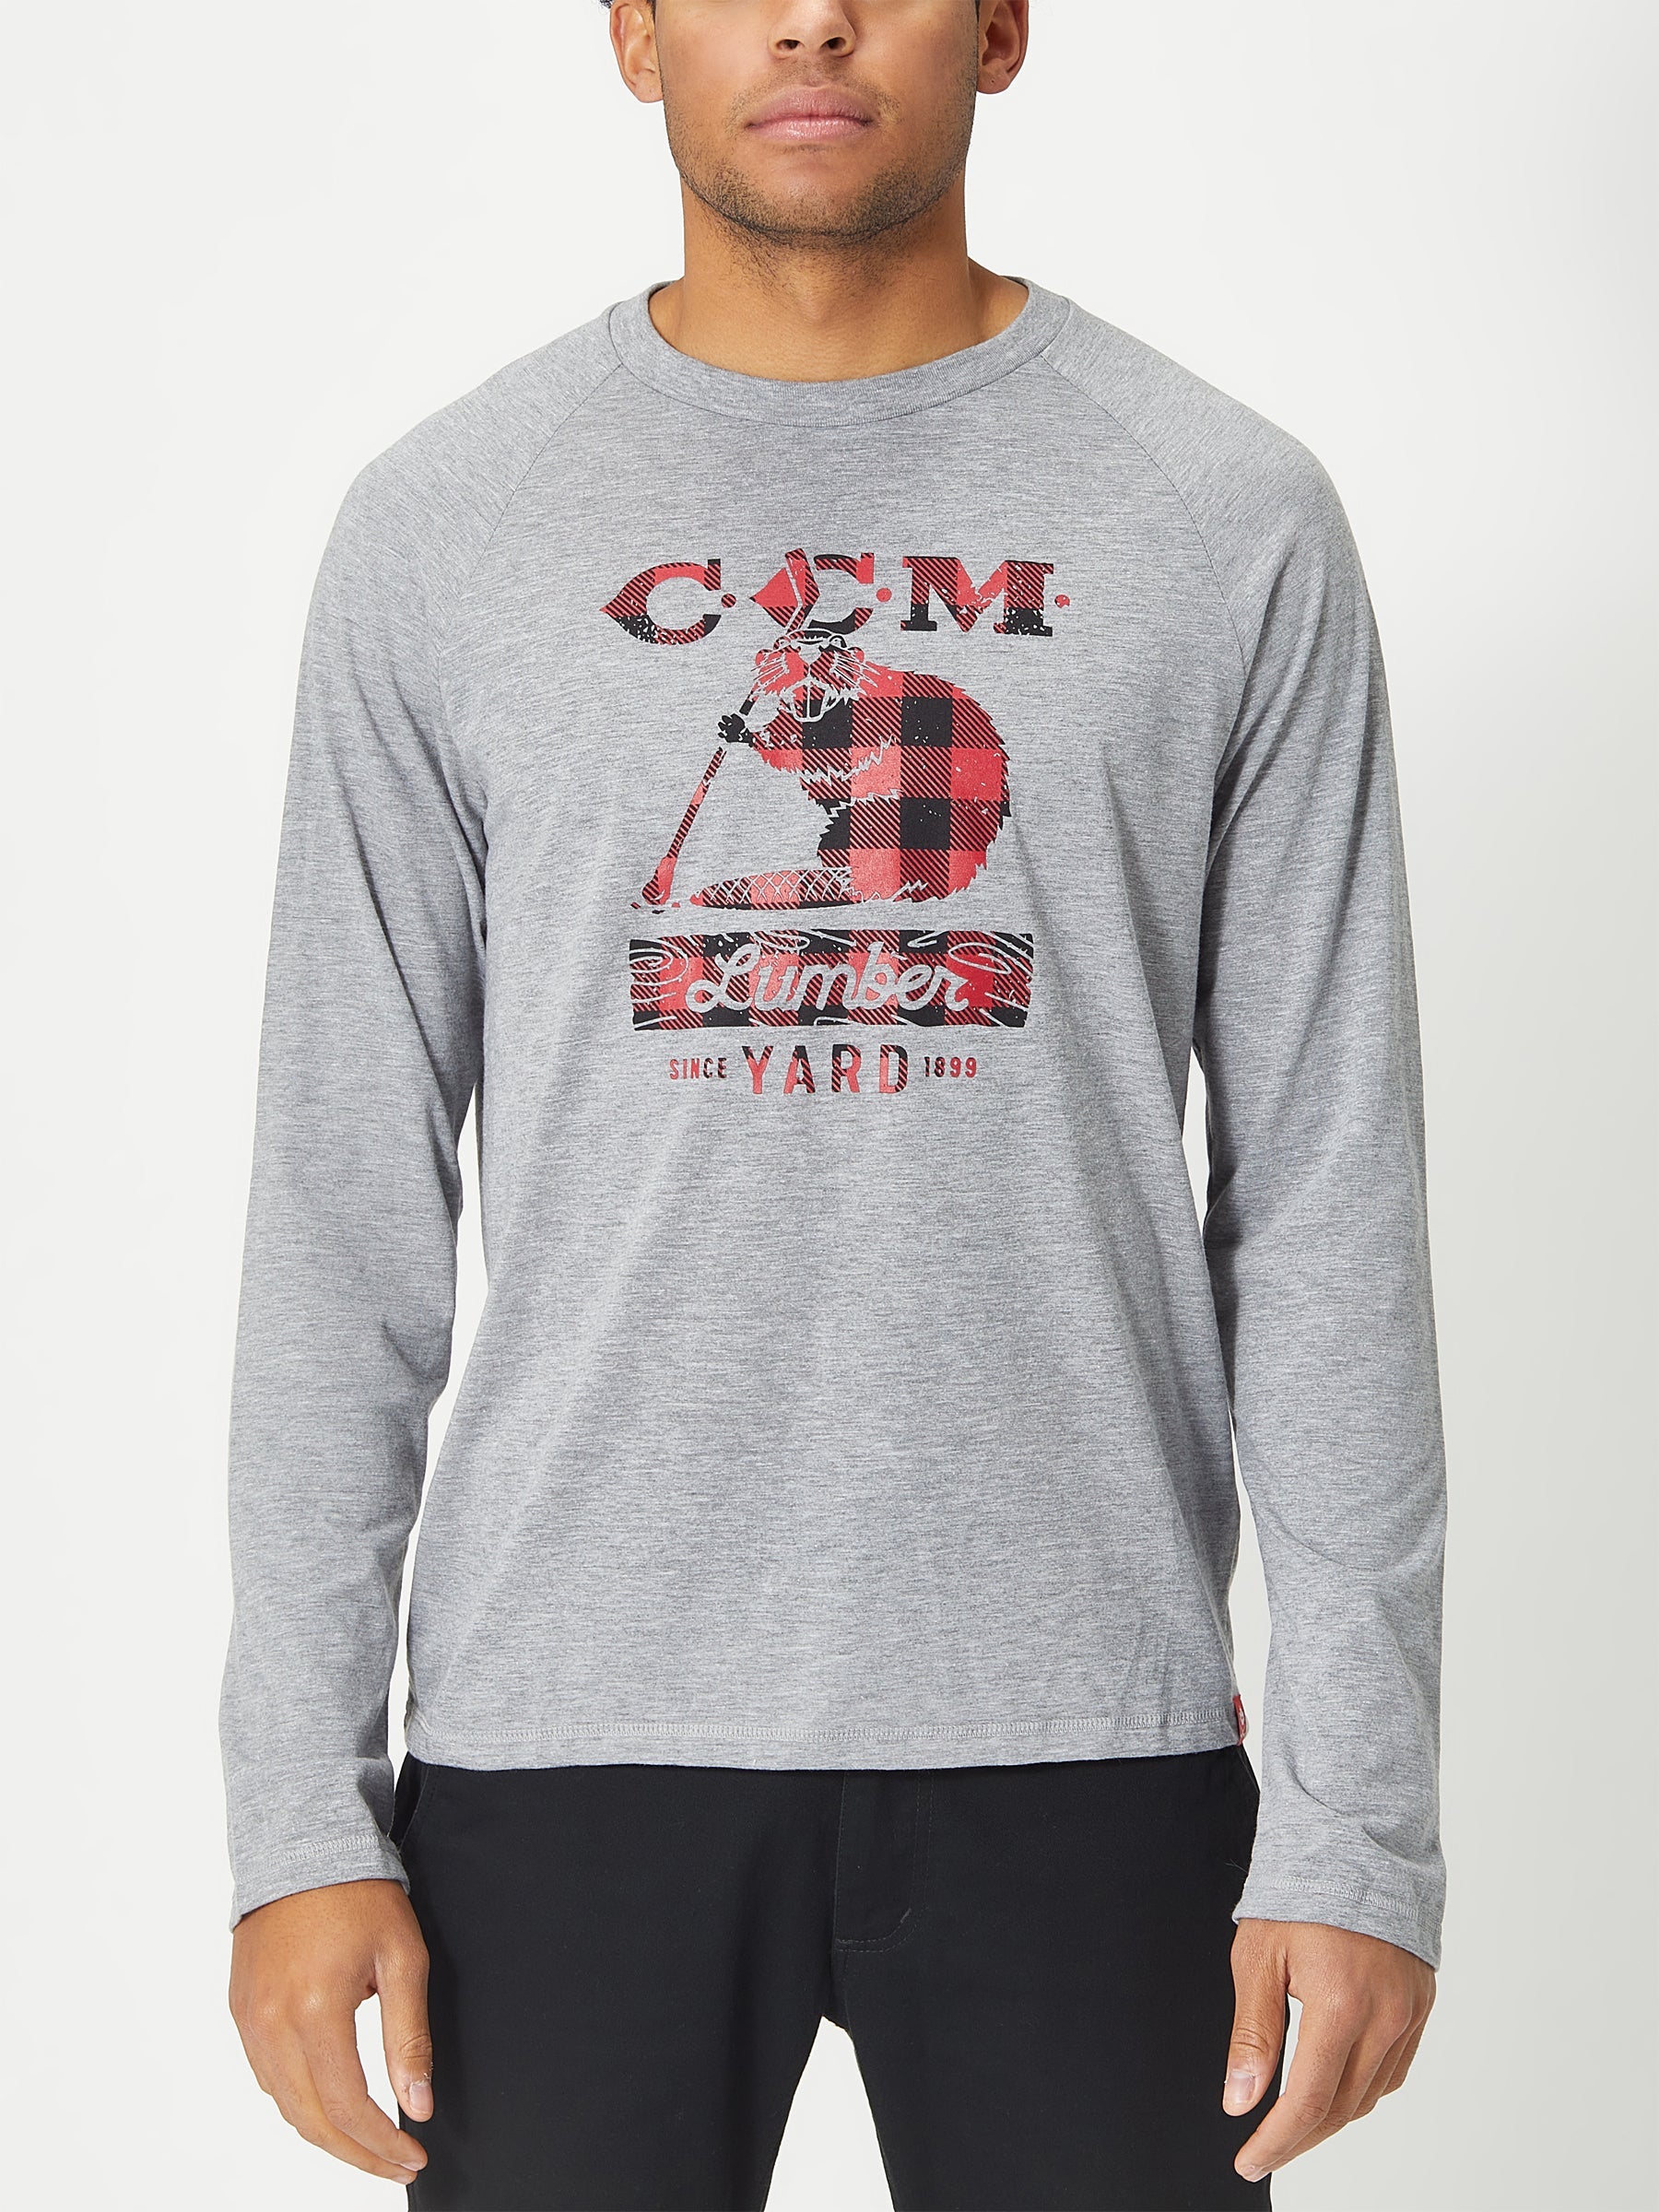 CCM Hockey Sparks Tech T Shirt Senior/Adult Gray/Orange 